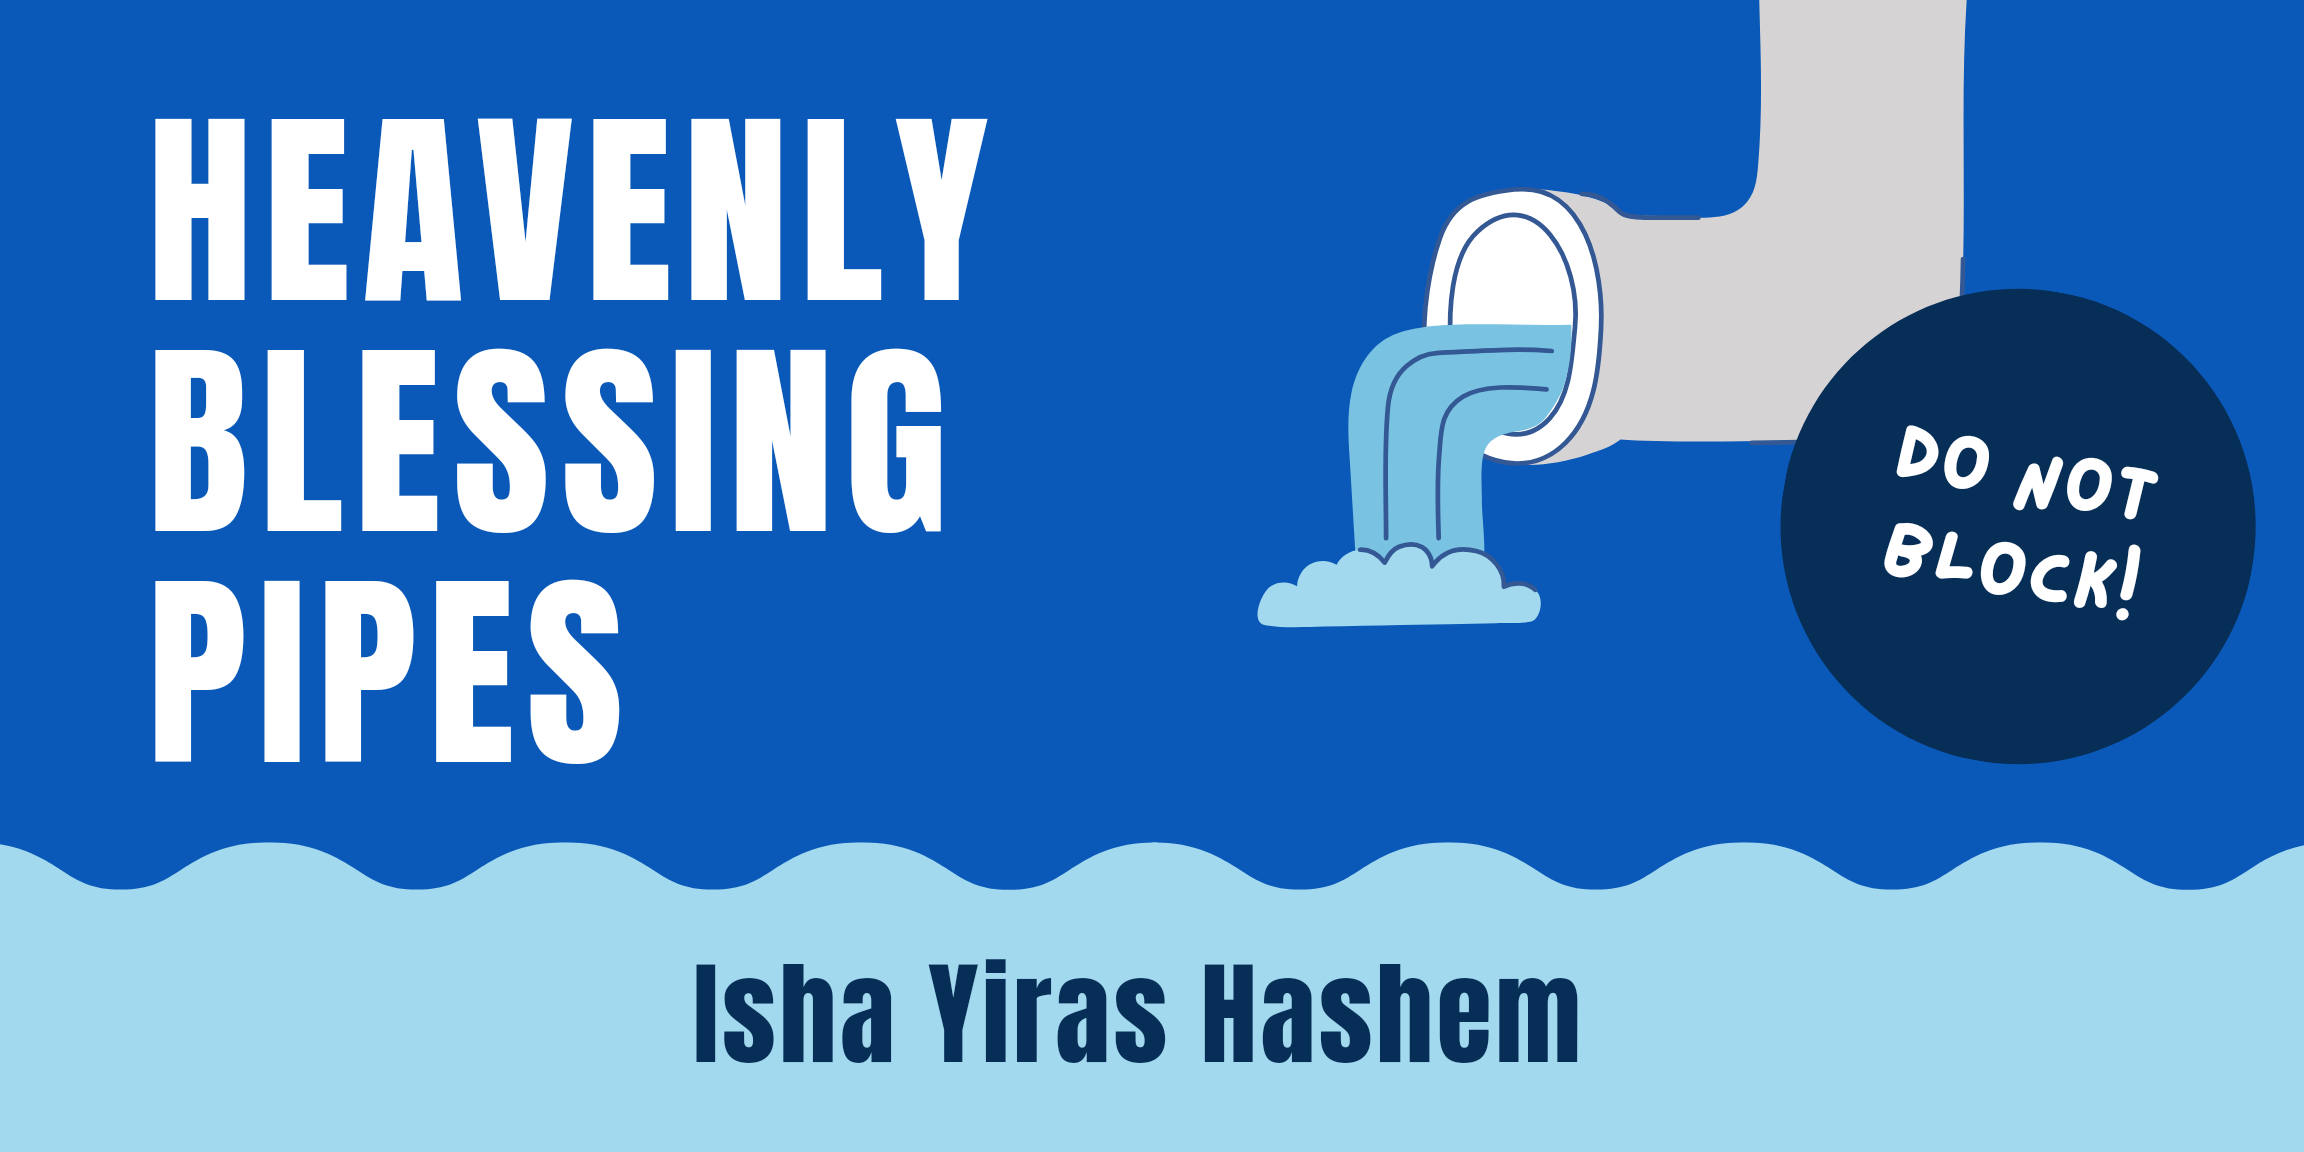 Paren el odio infundado - Isha Yiras Hashem at Substack